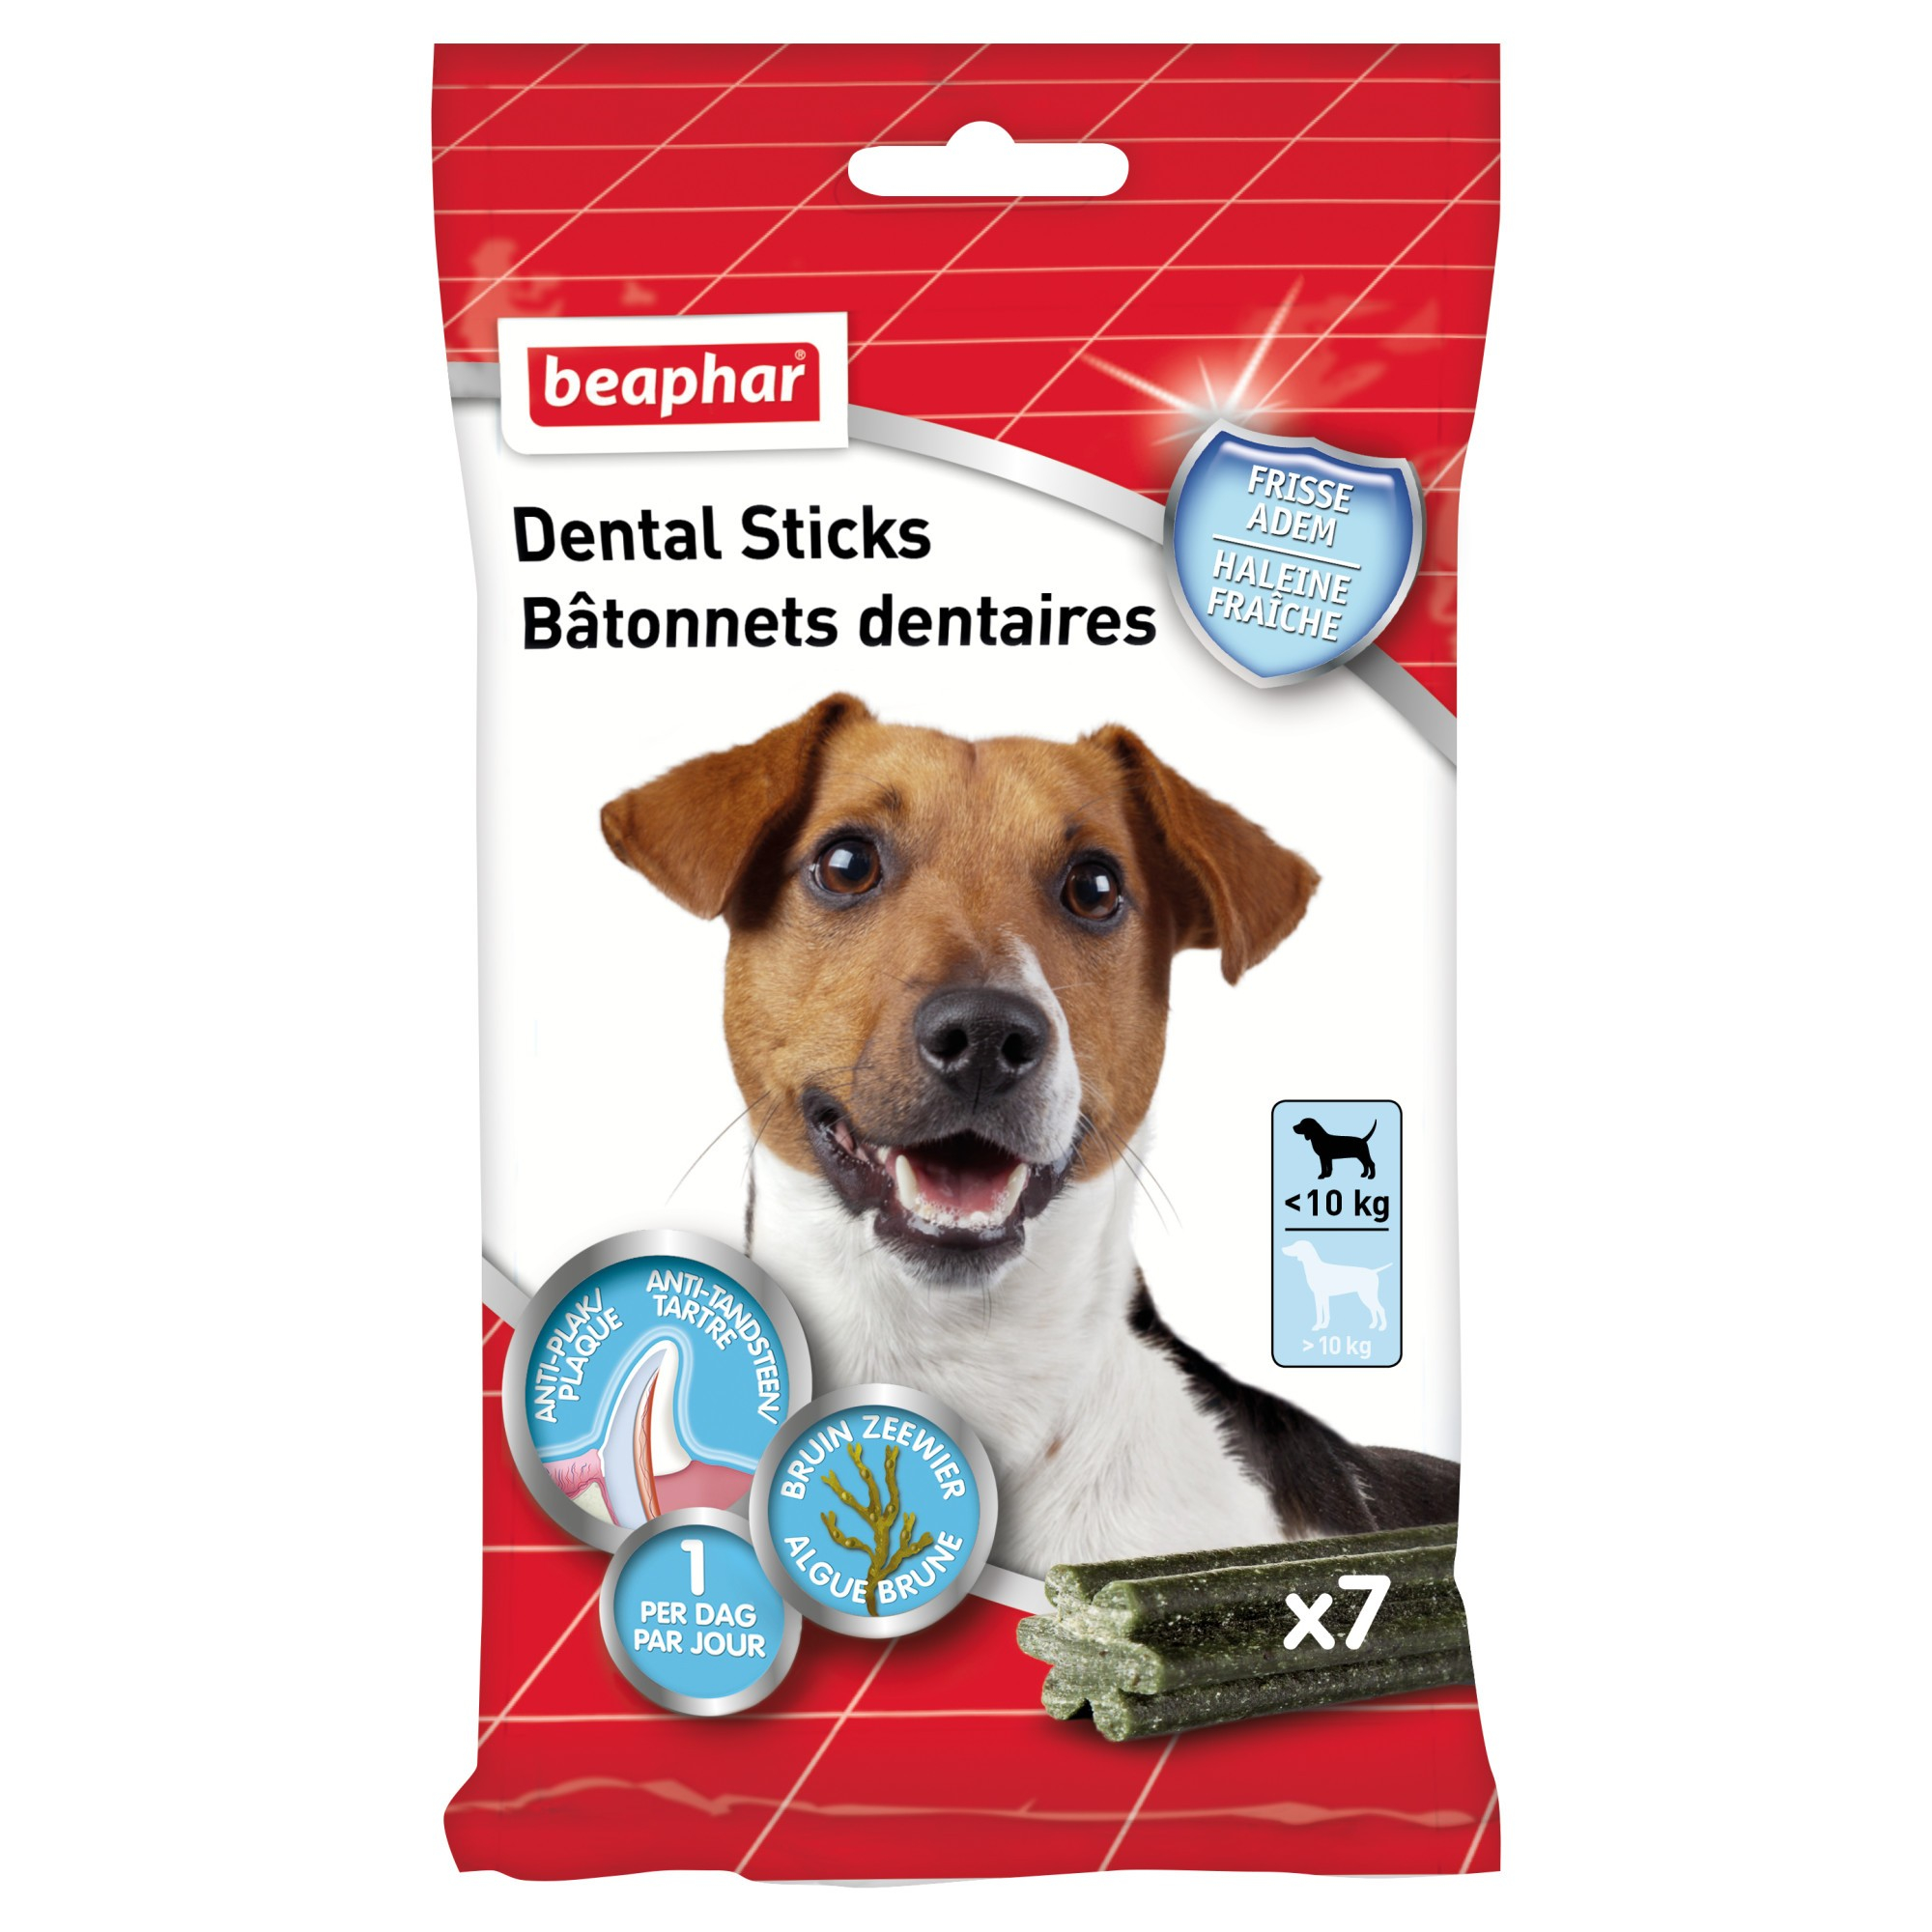 Sticks dentales para perros